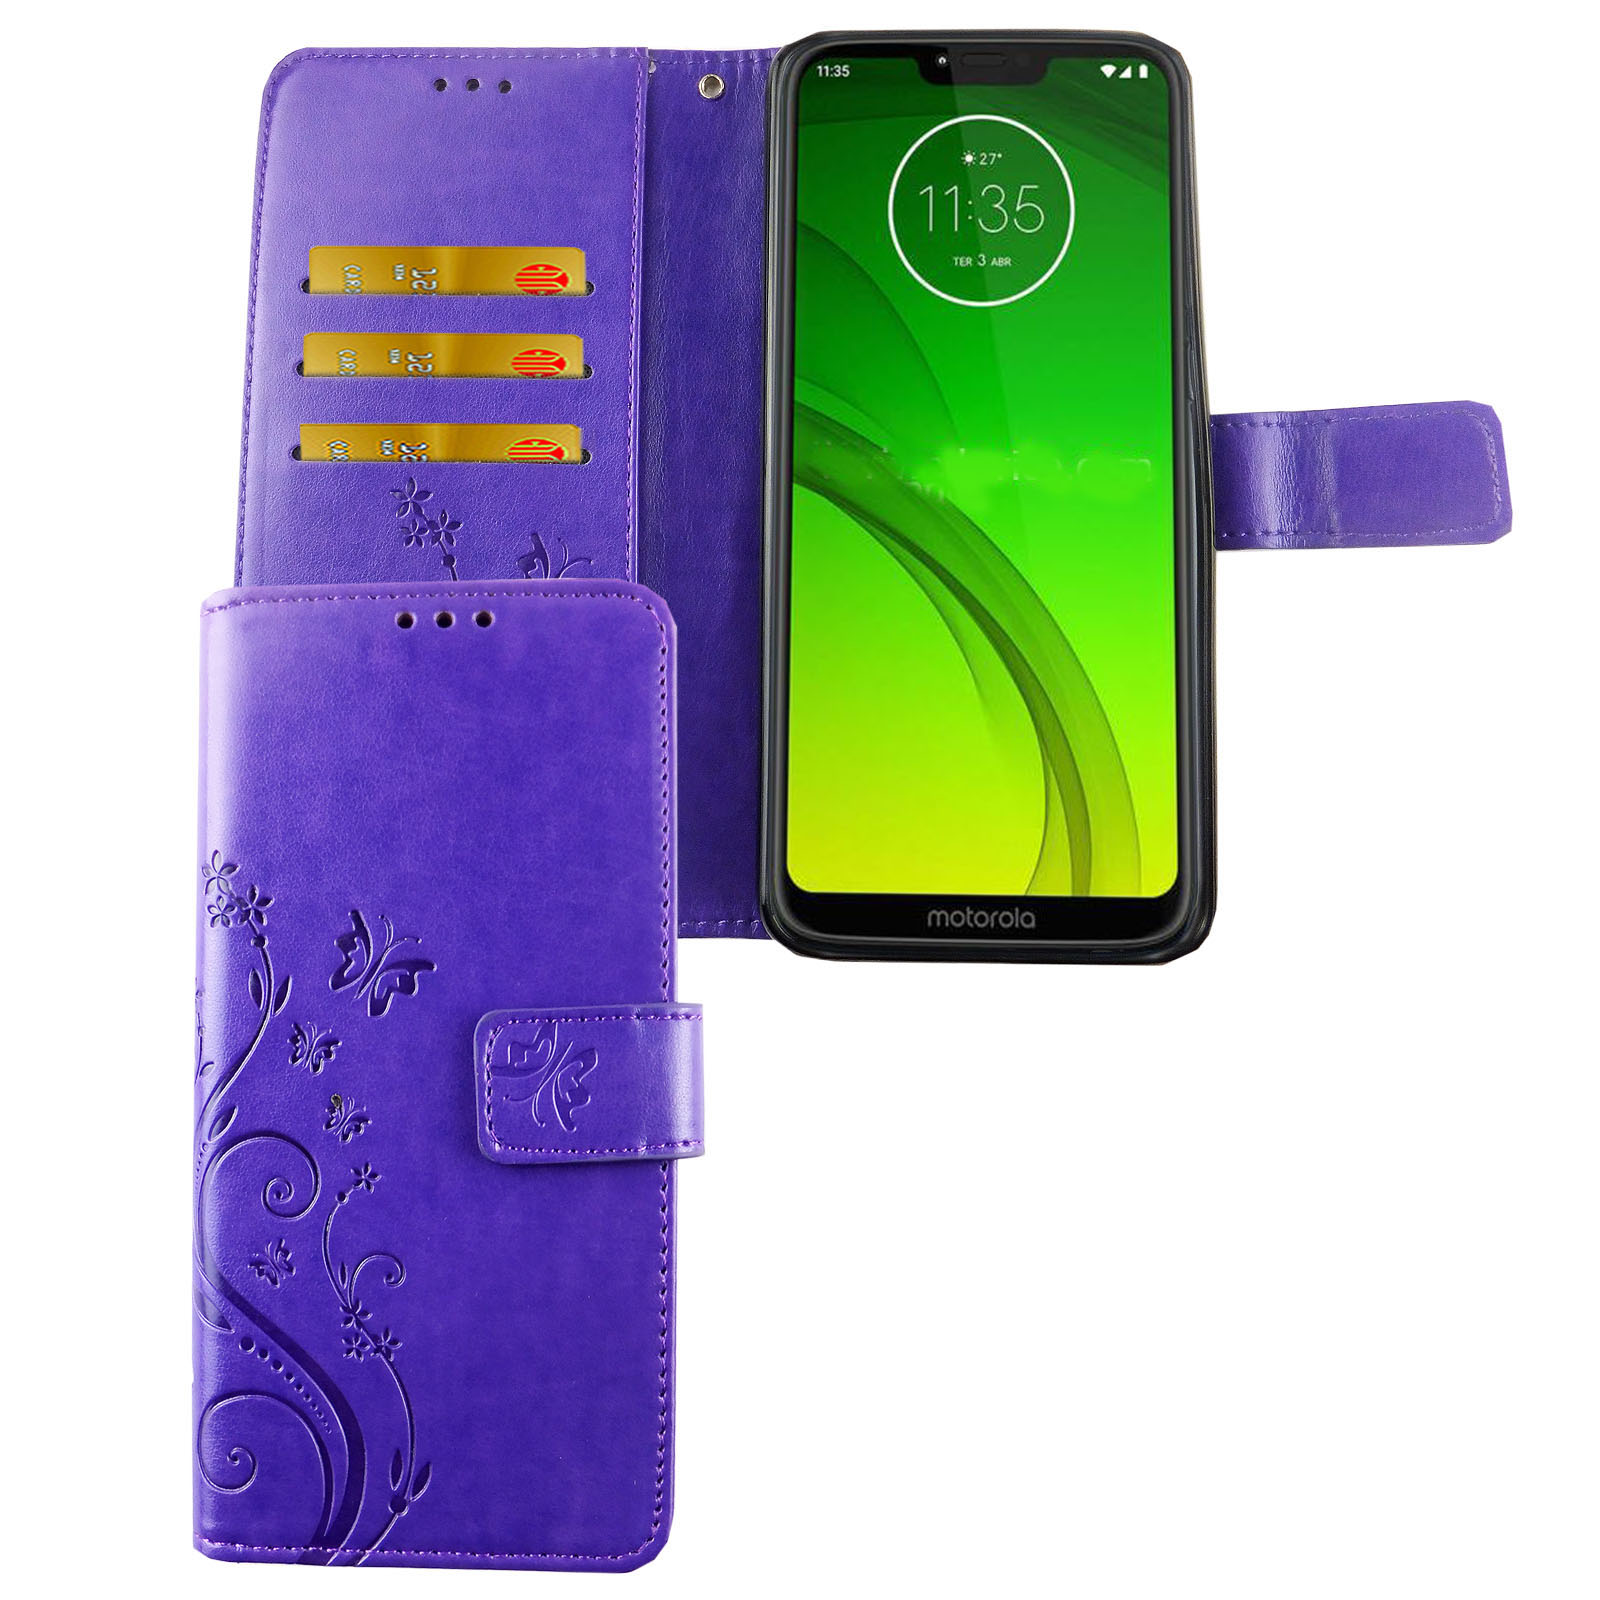 DESIGN Motorola, Violett Bookcover, KÖNIG G7, Moto Handyhülle,